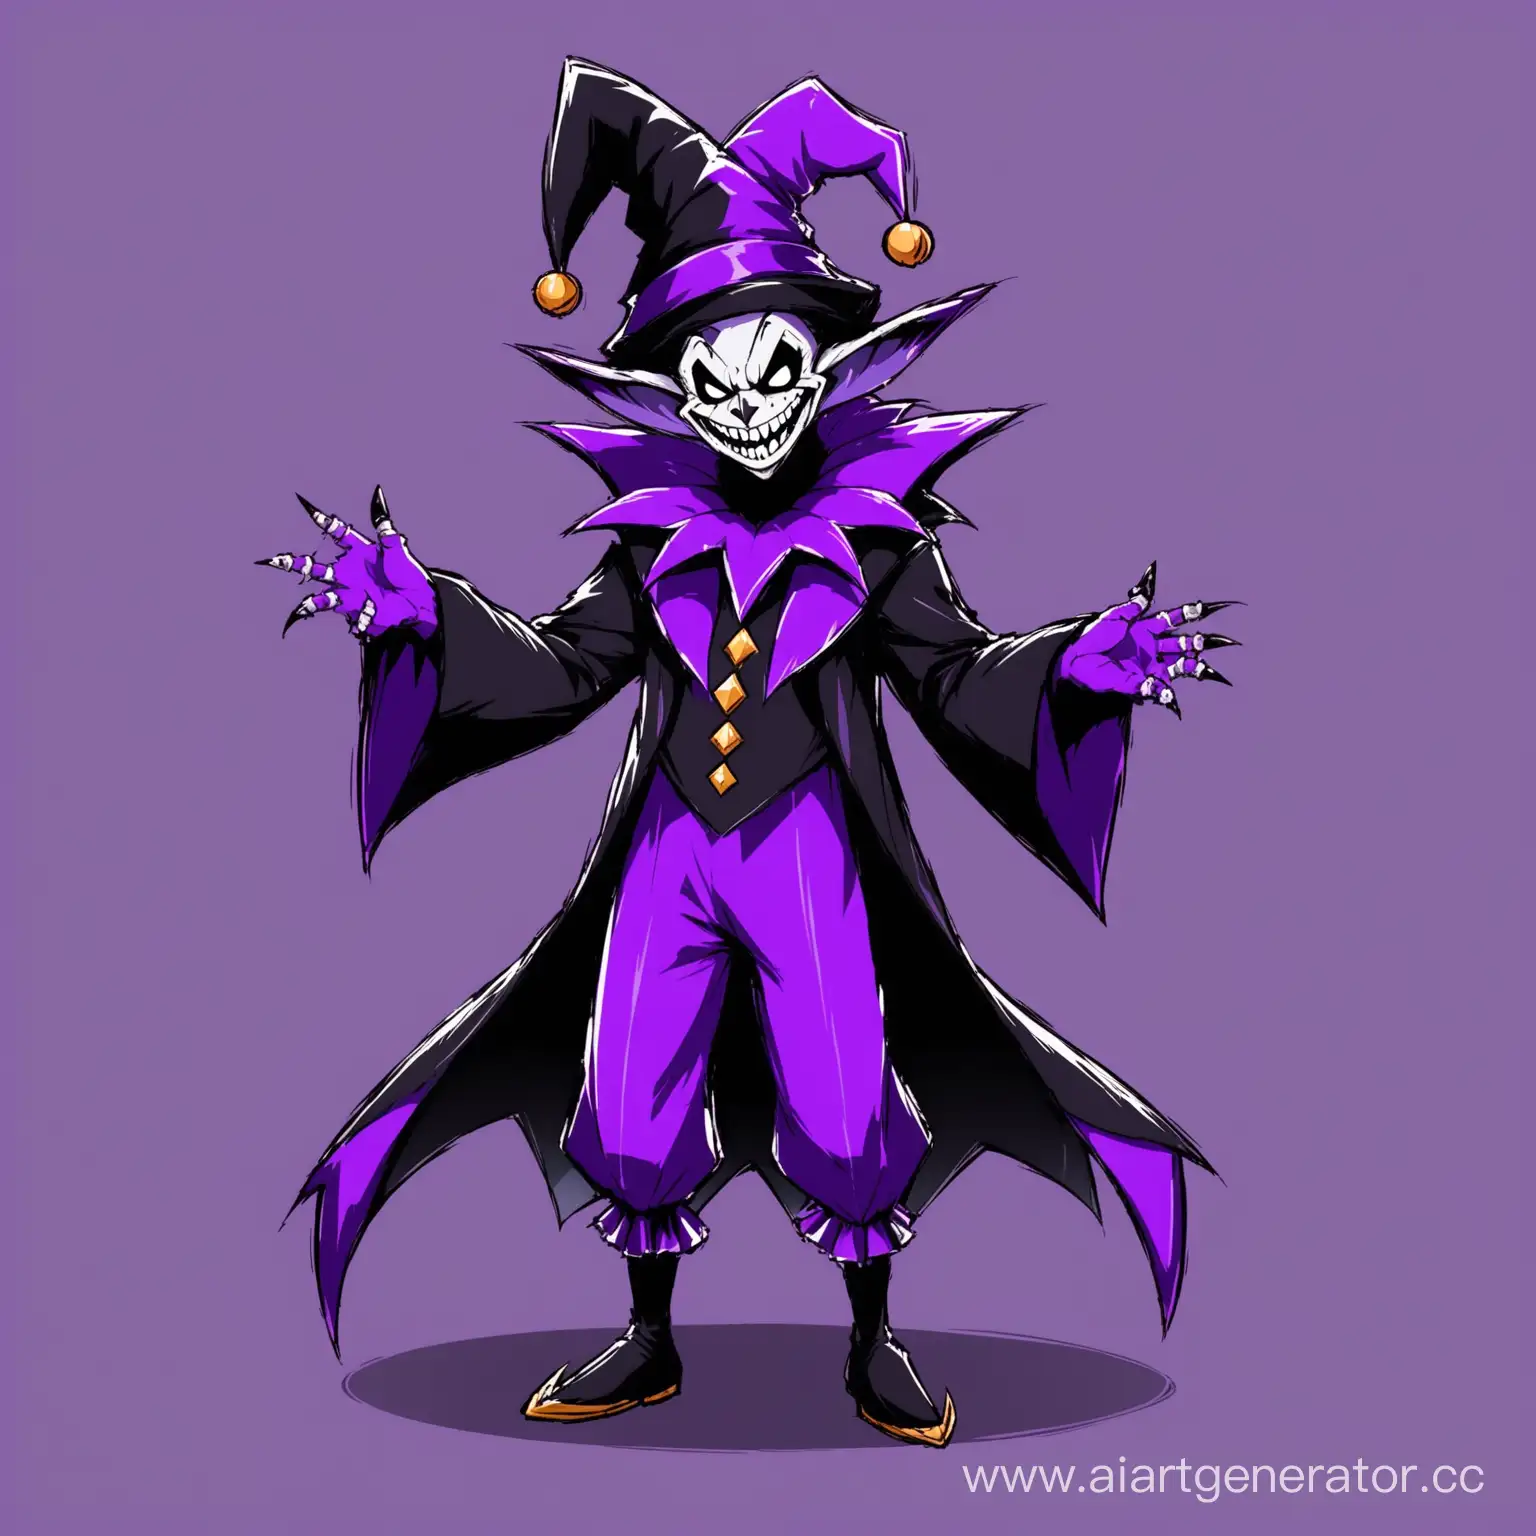 Jevil the jester, light blue-cray skin, black and dark purple clothes